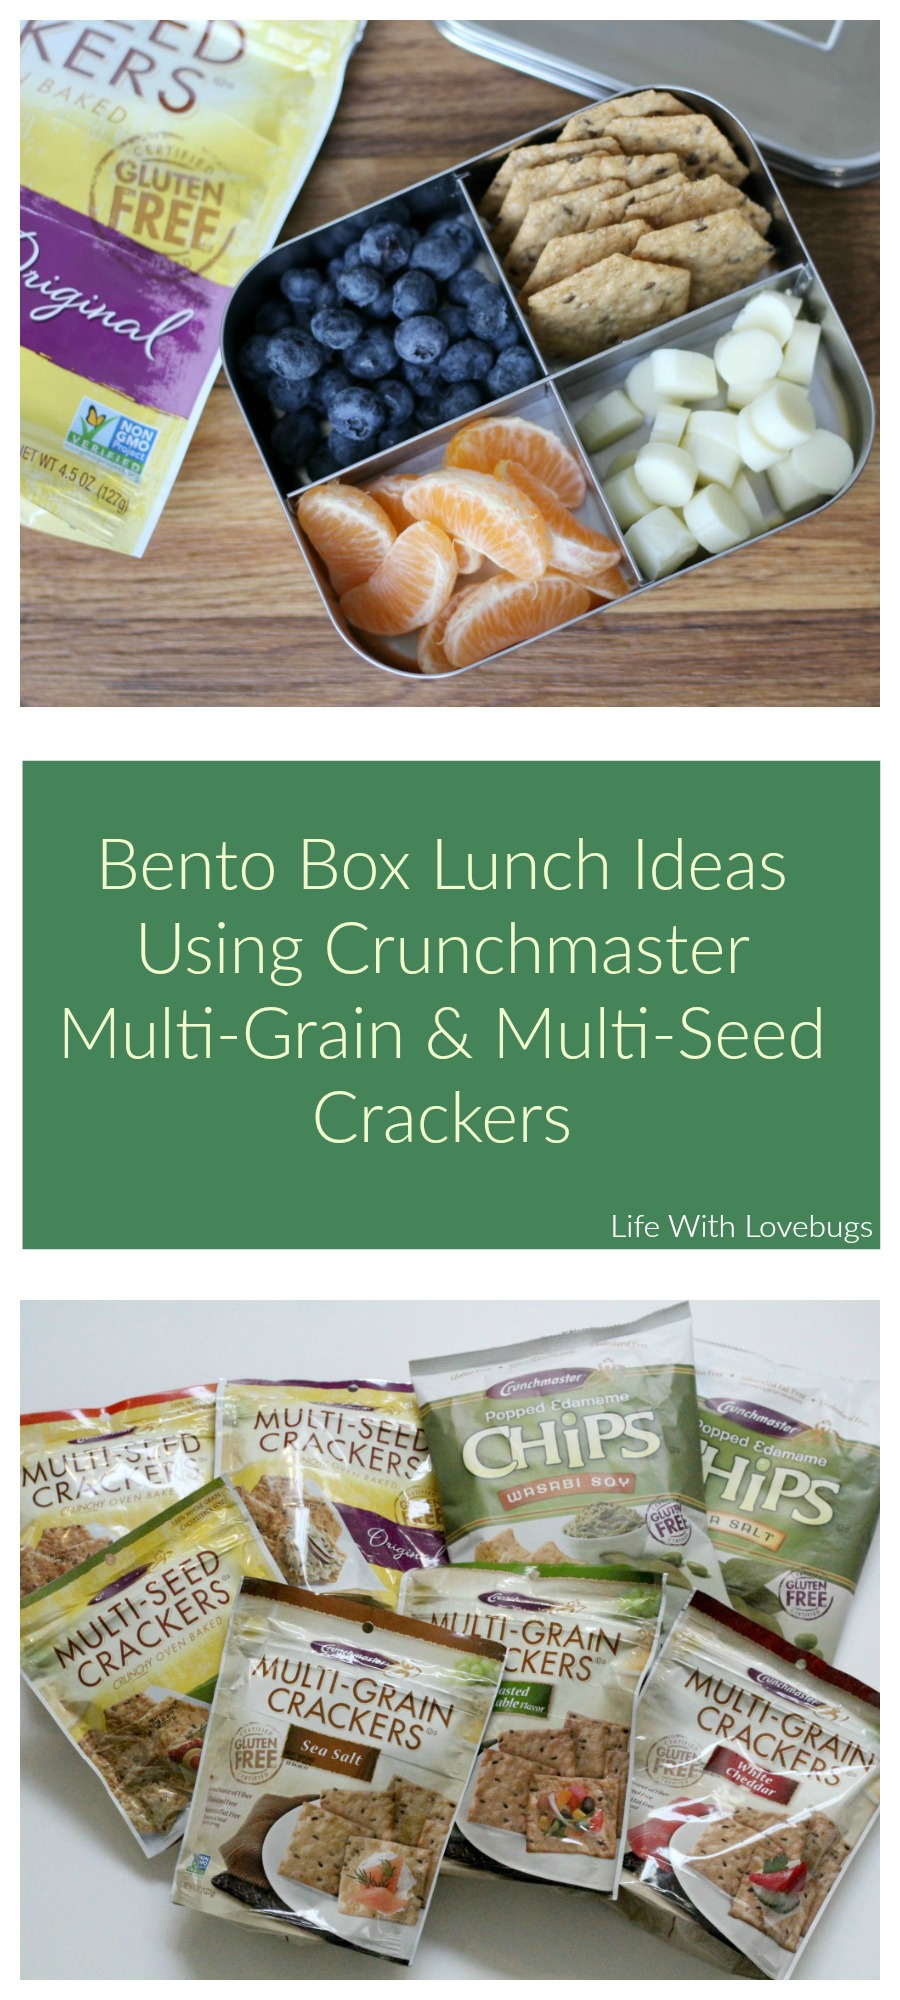 Bento Box Lunch Ideas Using Crunchmaster  Multi-Grain & Multi-Seed Crackers